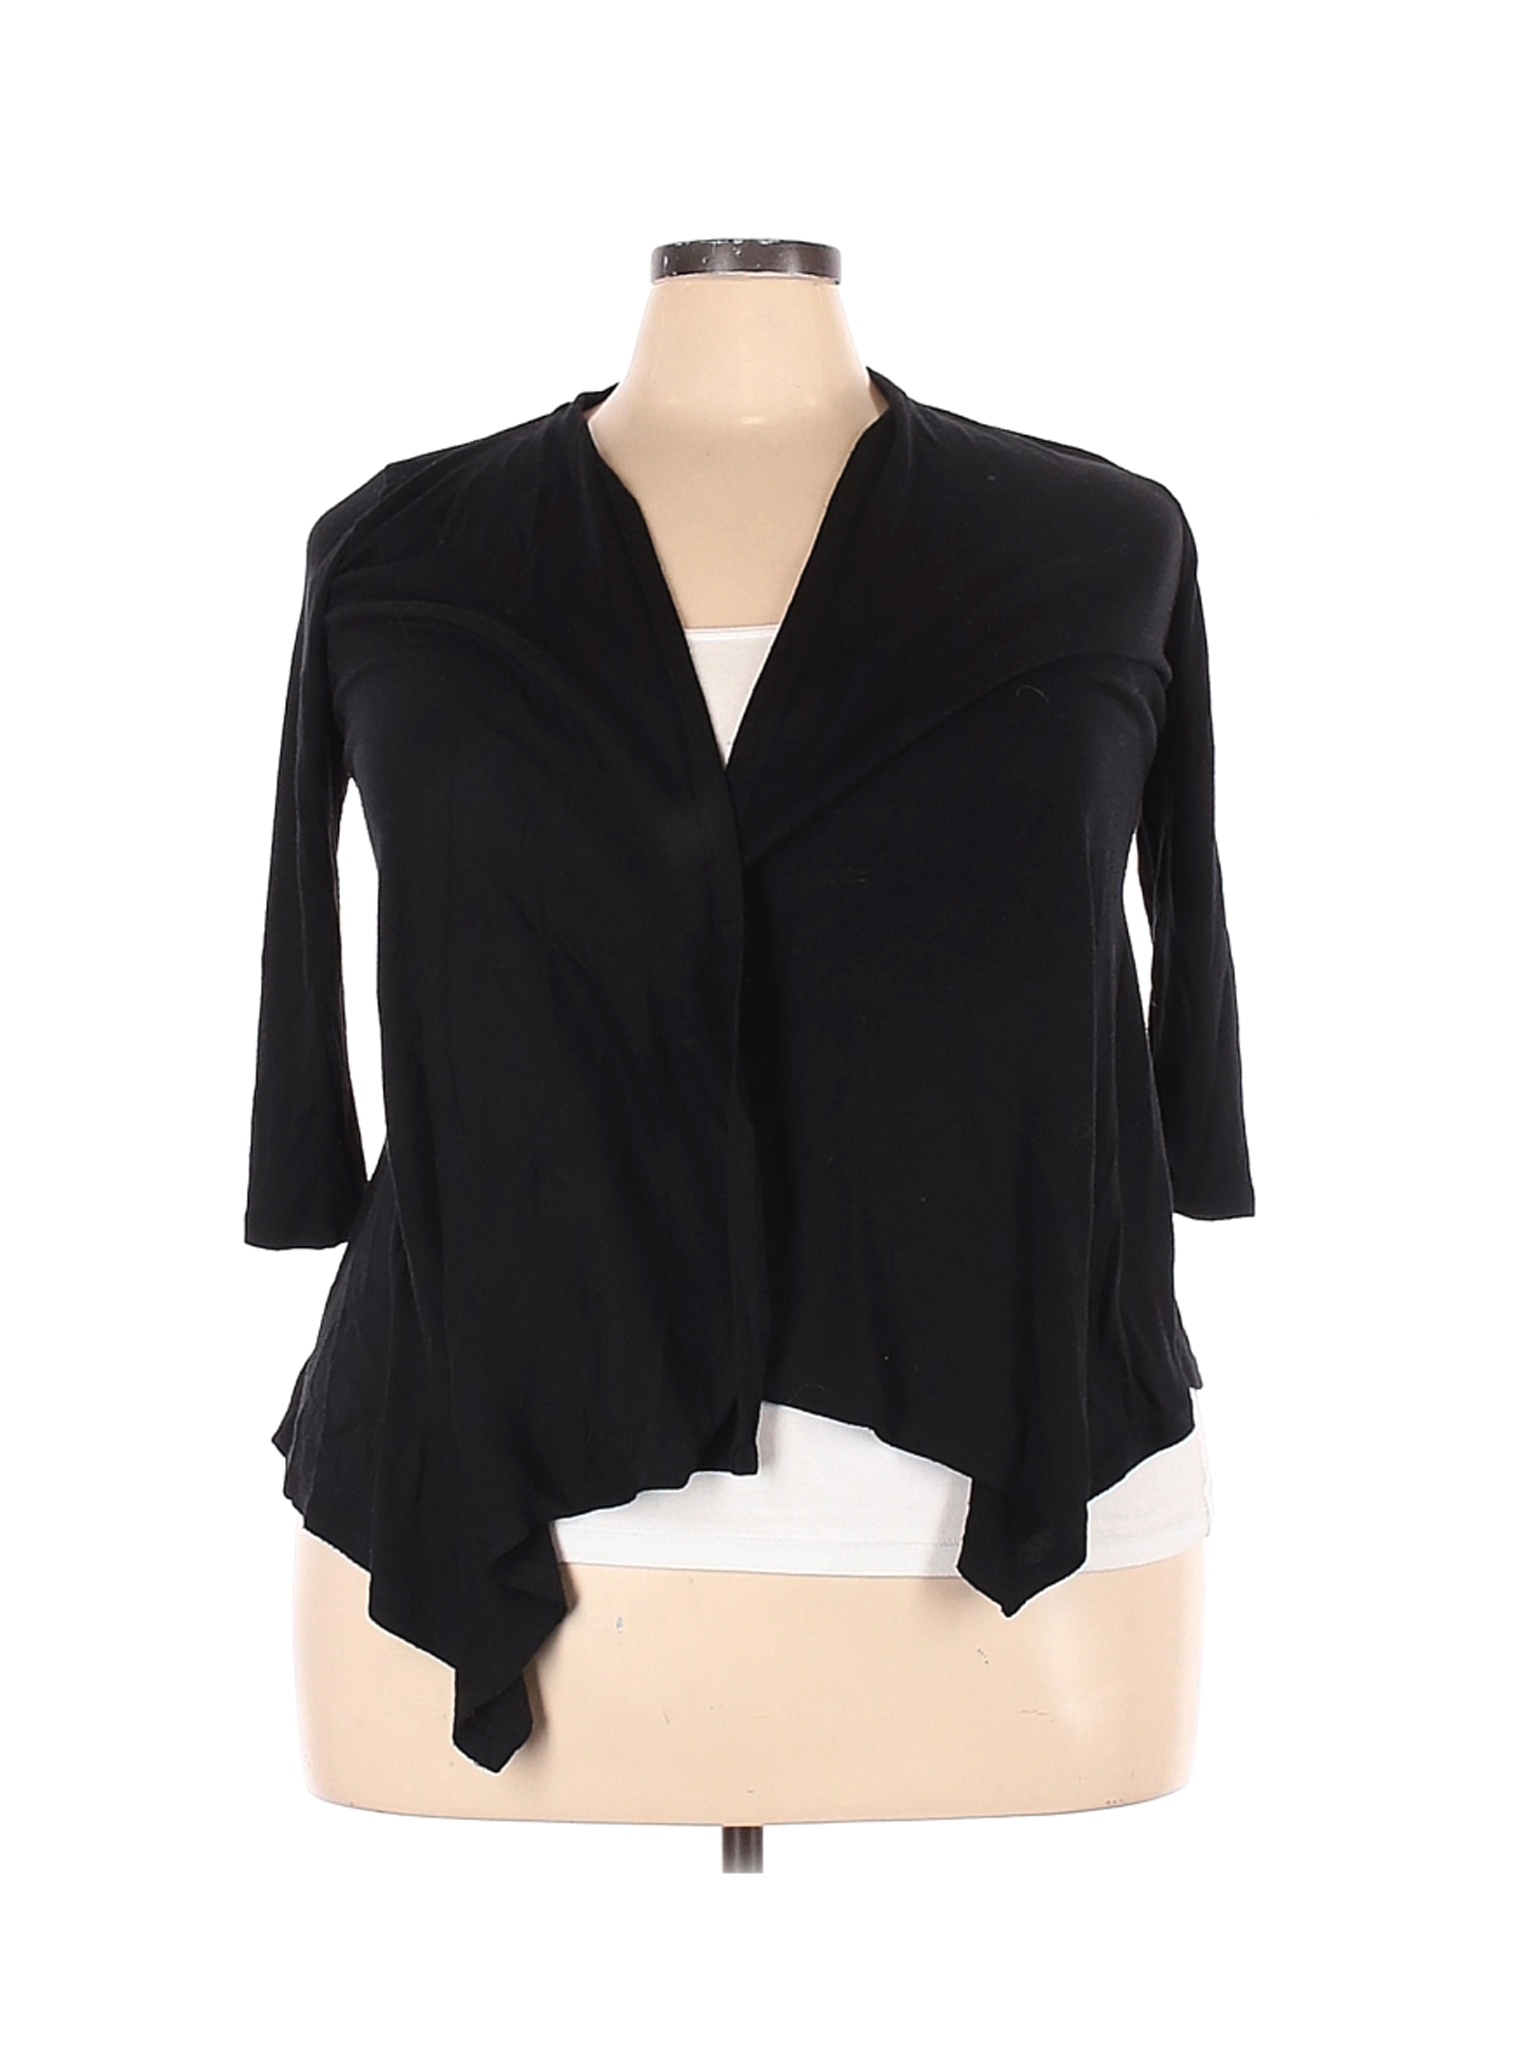 Style&Co Women Black Cardigan S | eBay